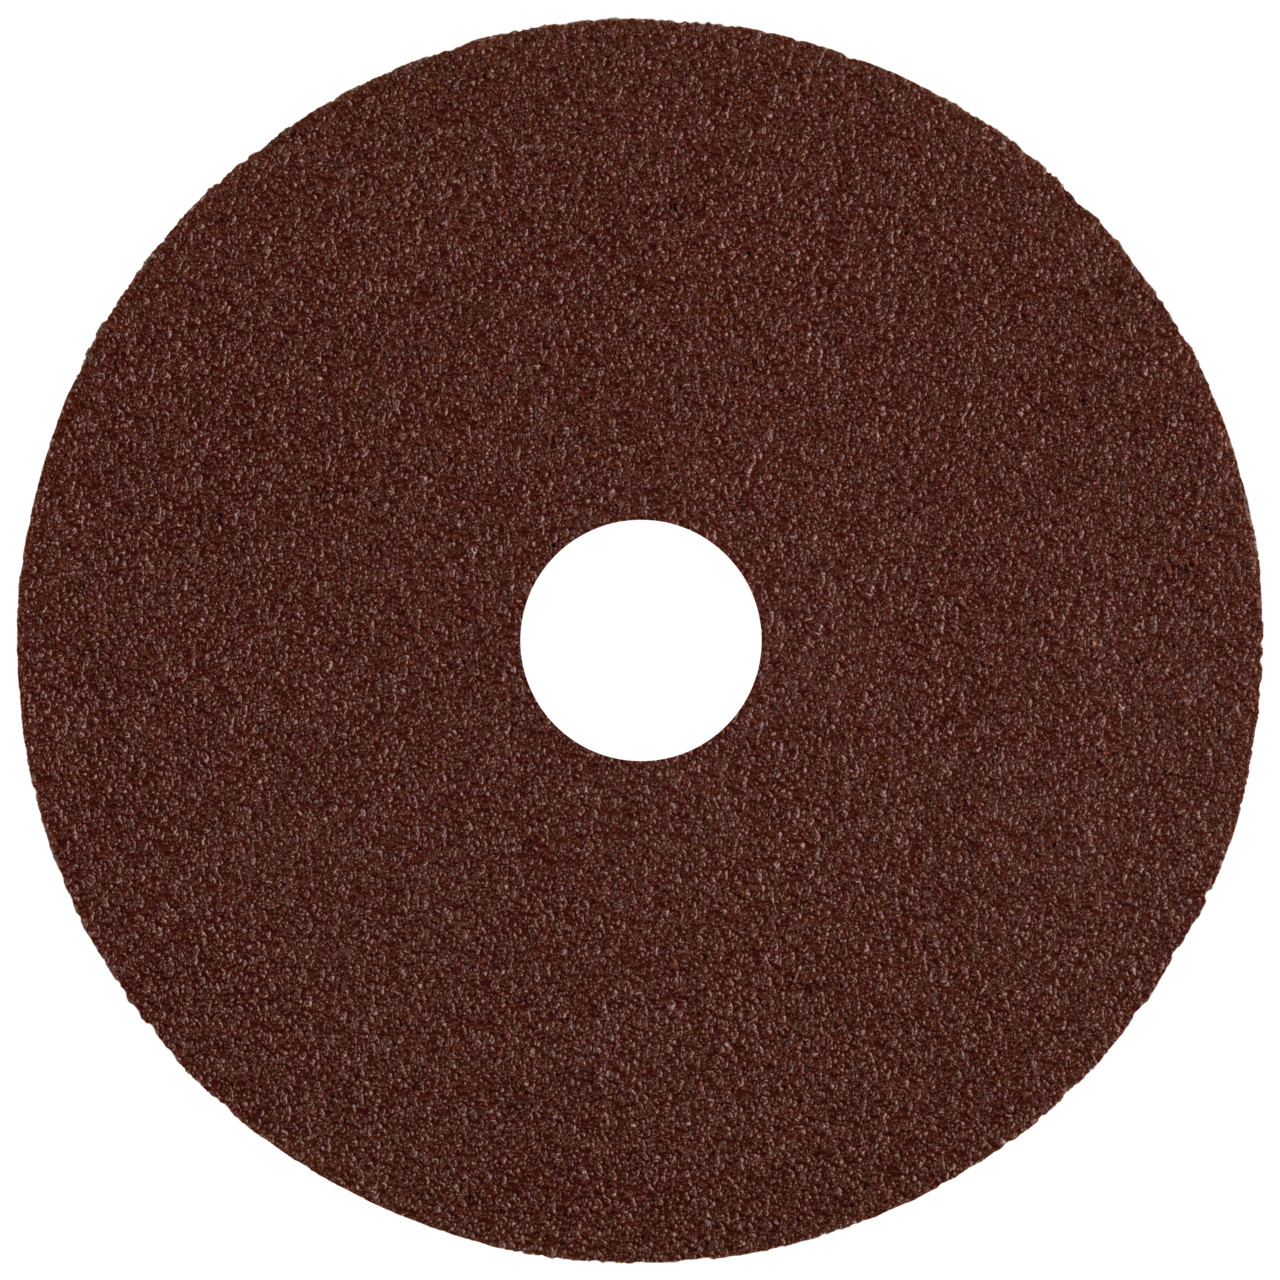 Tyrolit A-B02 V Vulcanised fibre disc DxH 125x22 For steel, non-ferrous metals and wood, P120, shape: DISC, Art. 34286506